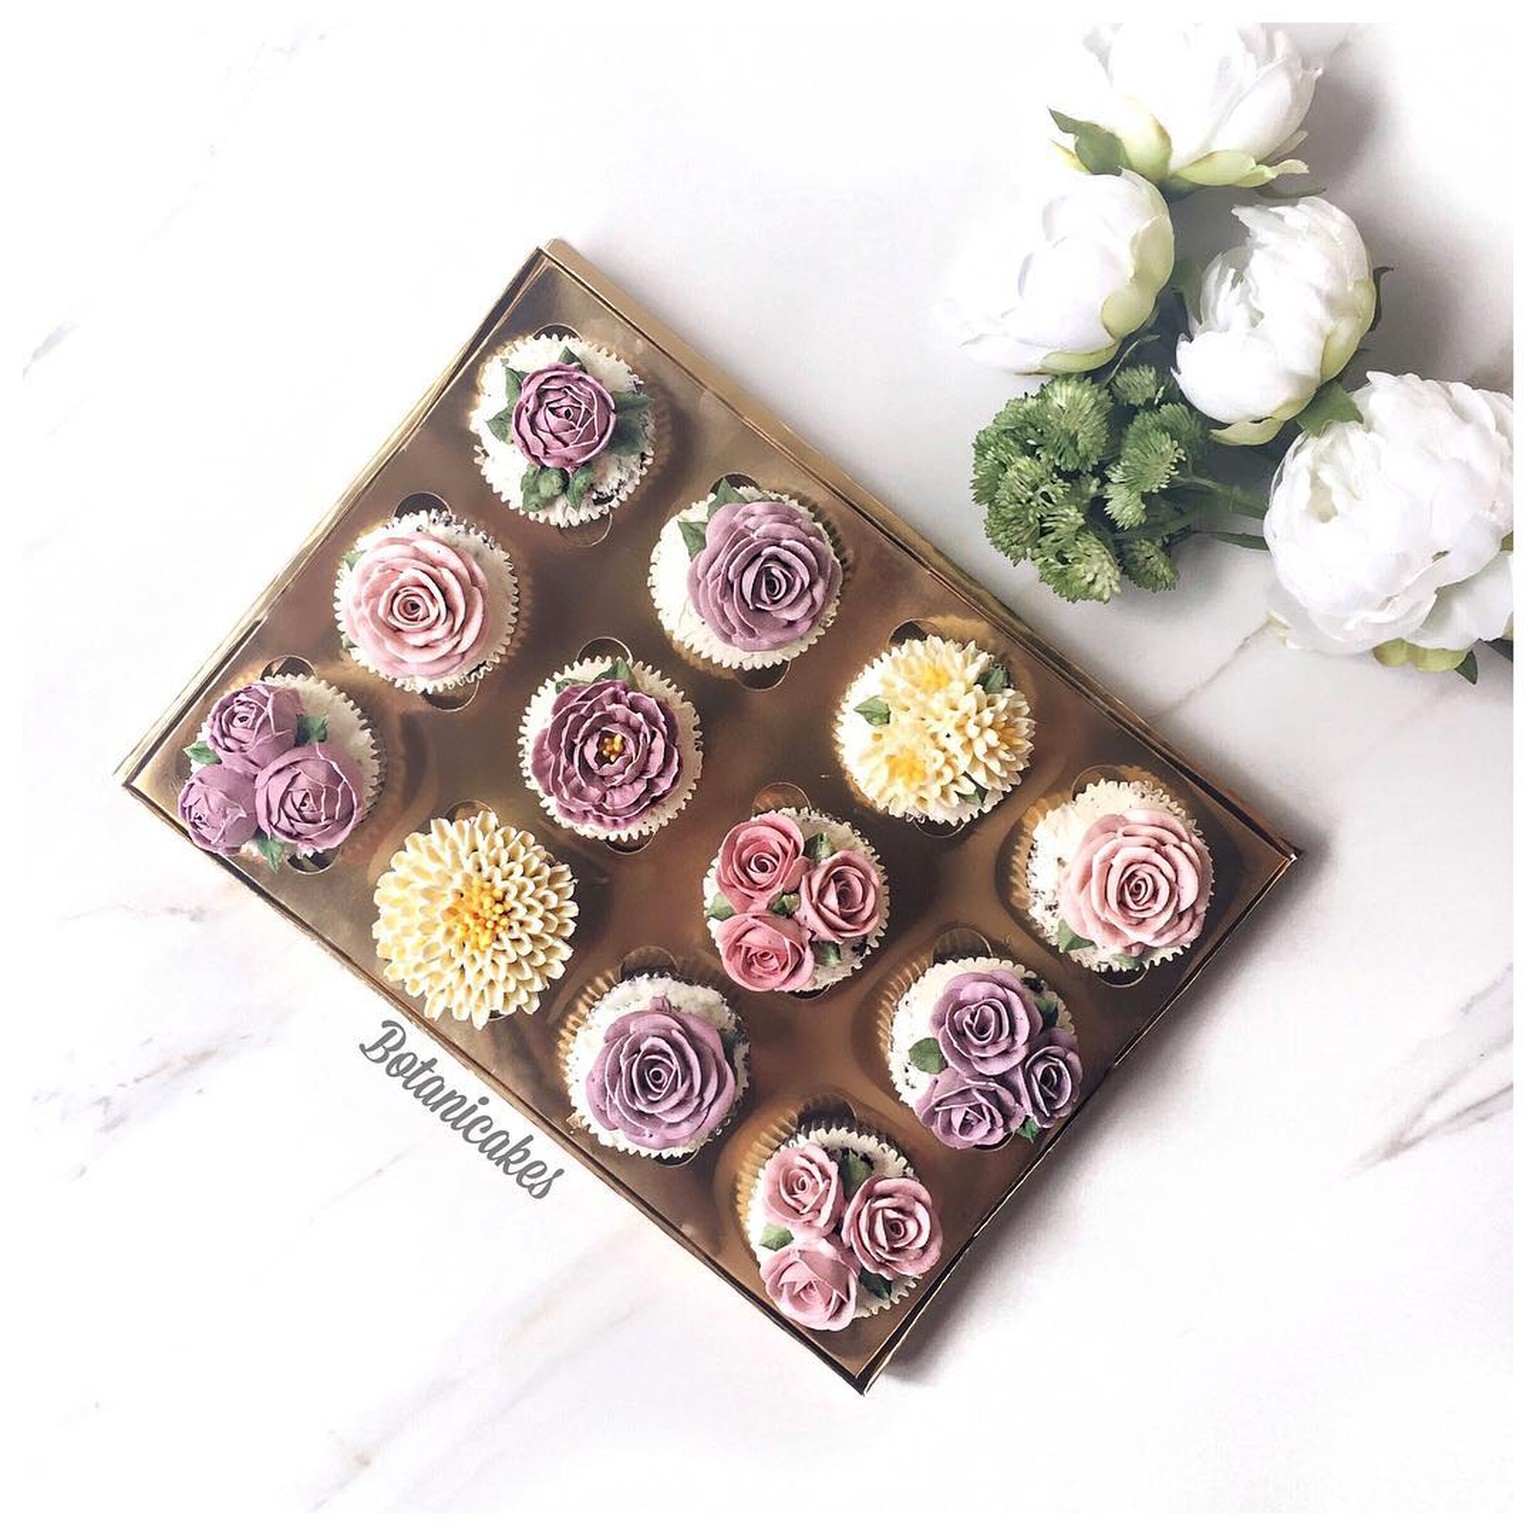 Blumen Cupcakes

https://www.instagram.com/p/BQFzsGkgTFN/?taken-by=botanicakes